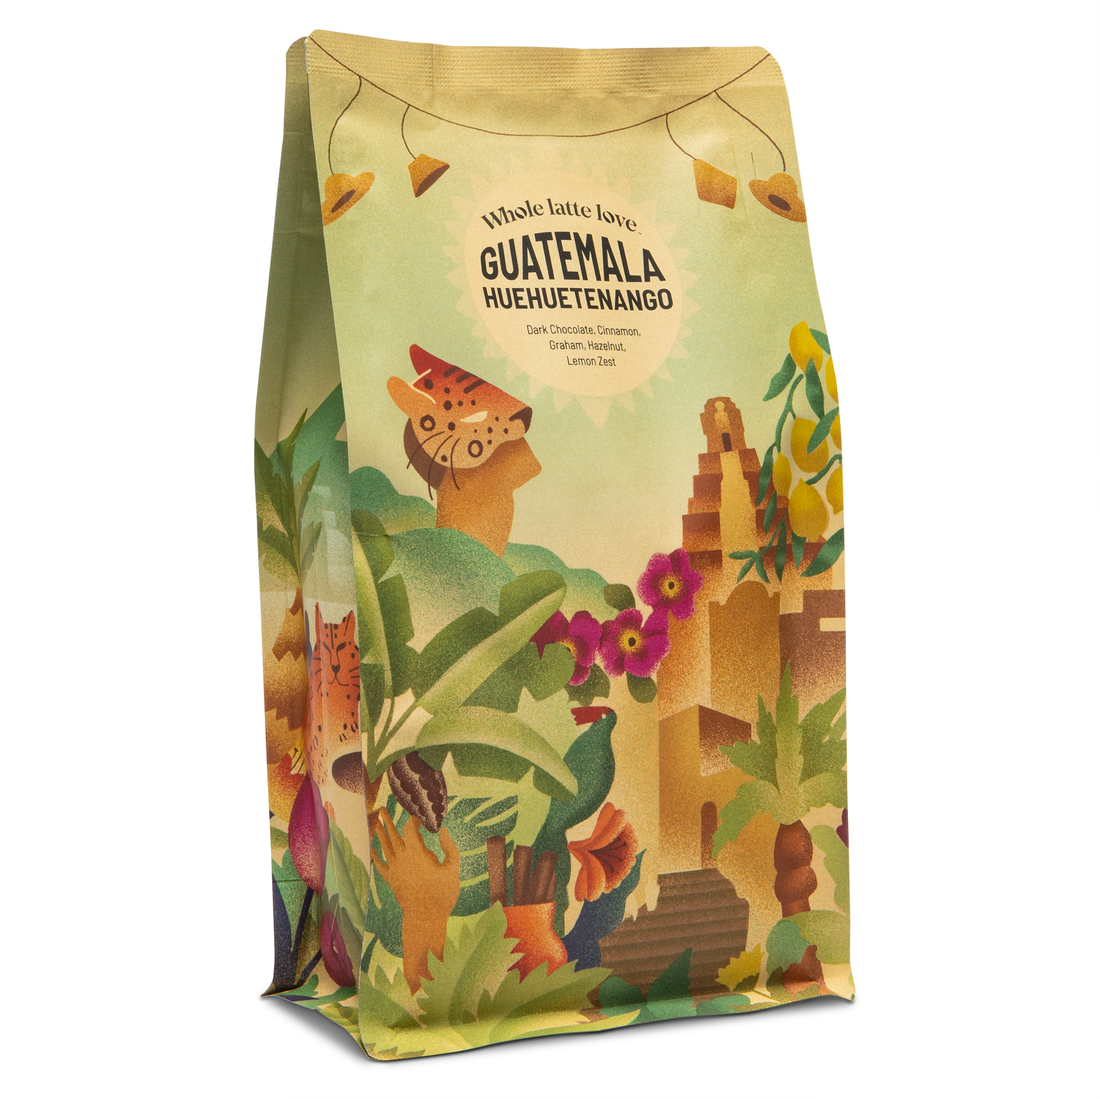 illy Arabica Selections Guatemala Whole Bean Coffee 100% Arabica 6